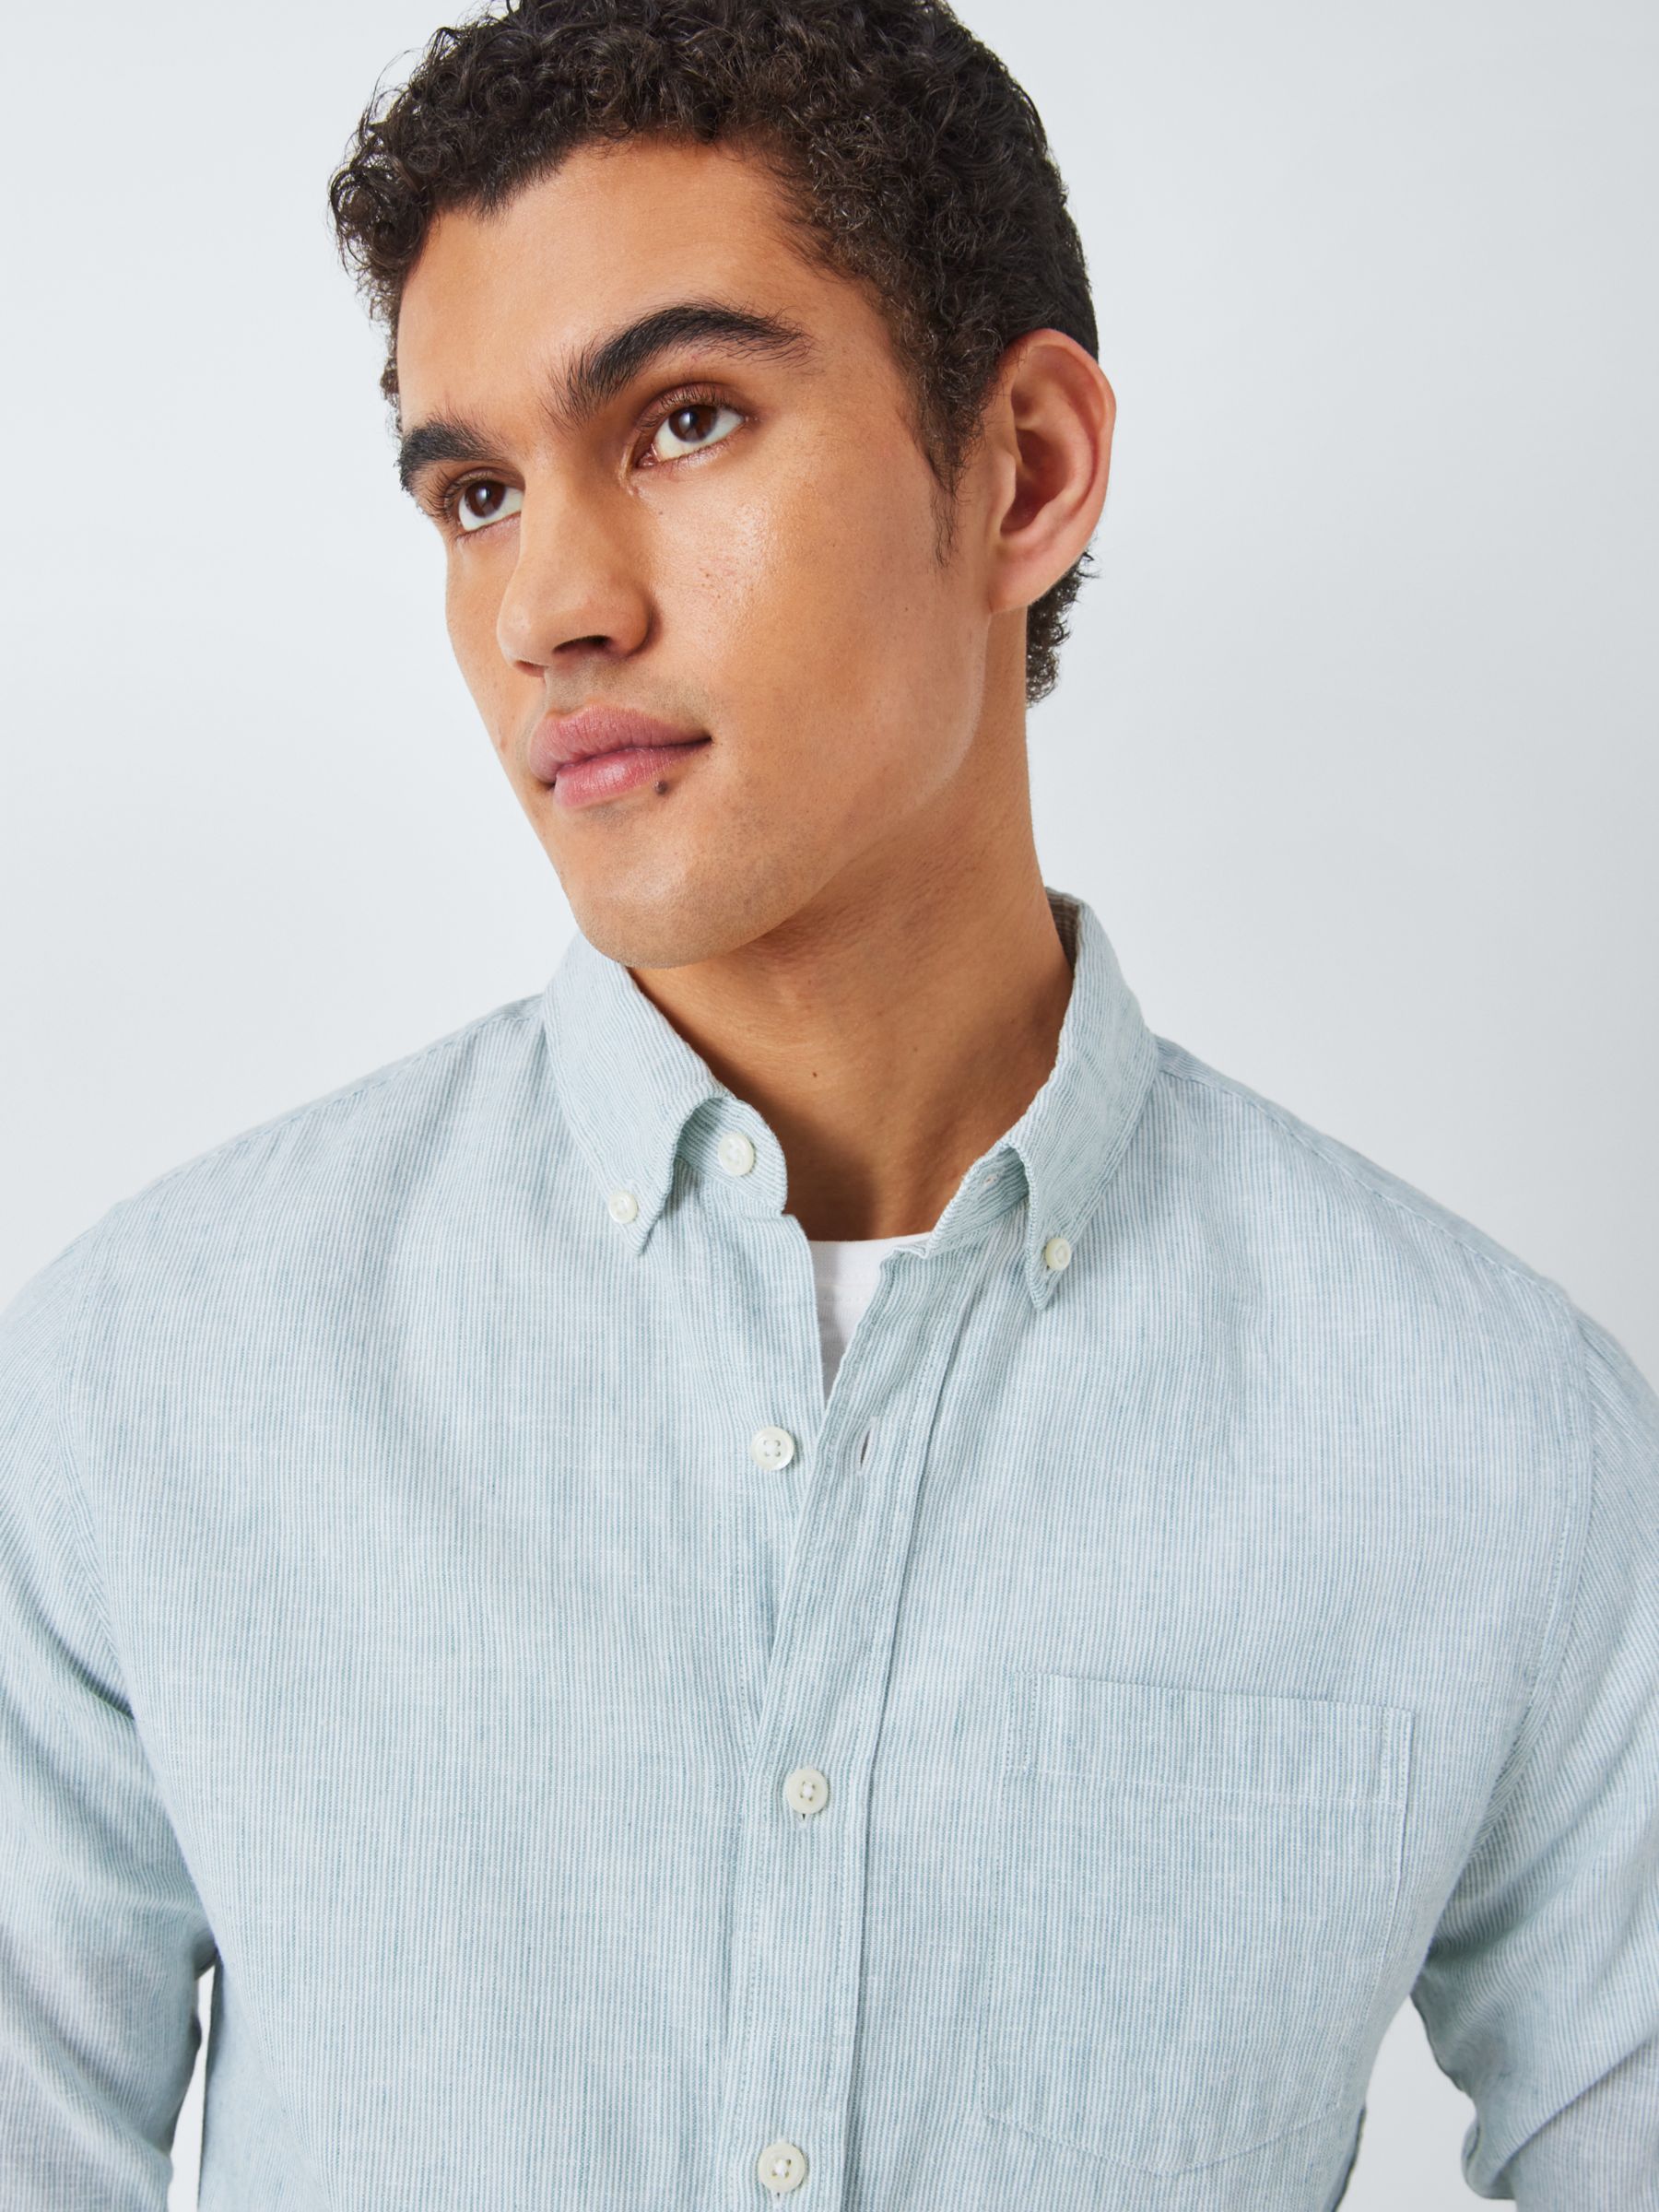 Buy John Lewis Linen Blend Micro Stripe Long Sleeve Shirt Online at johnlewis.com